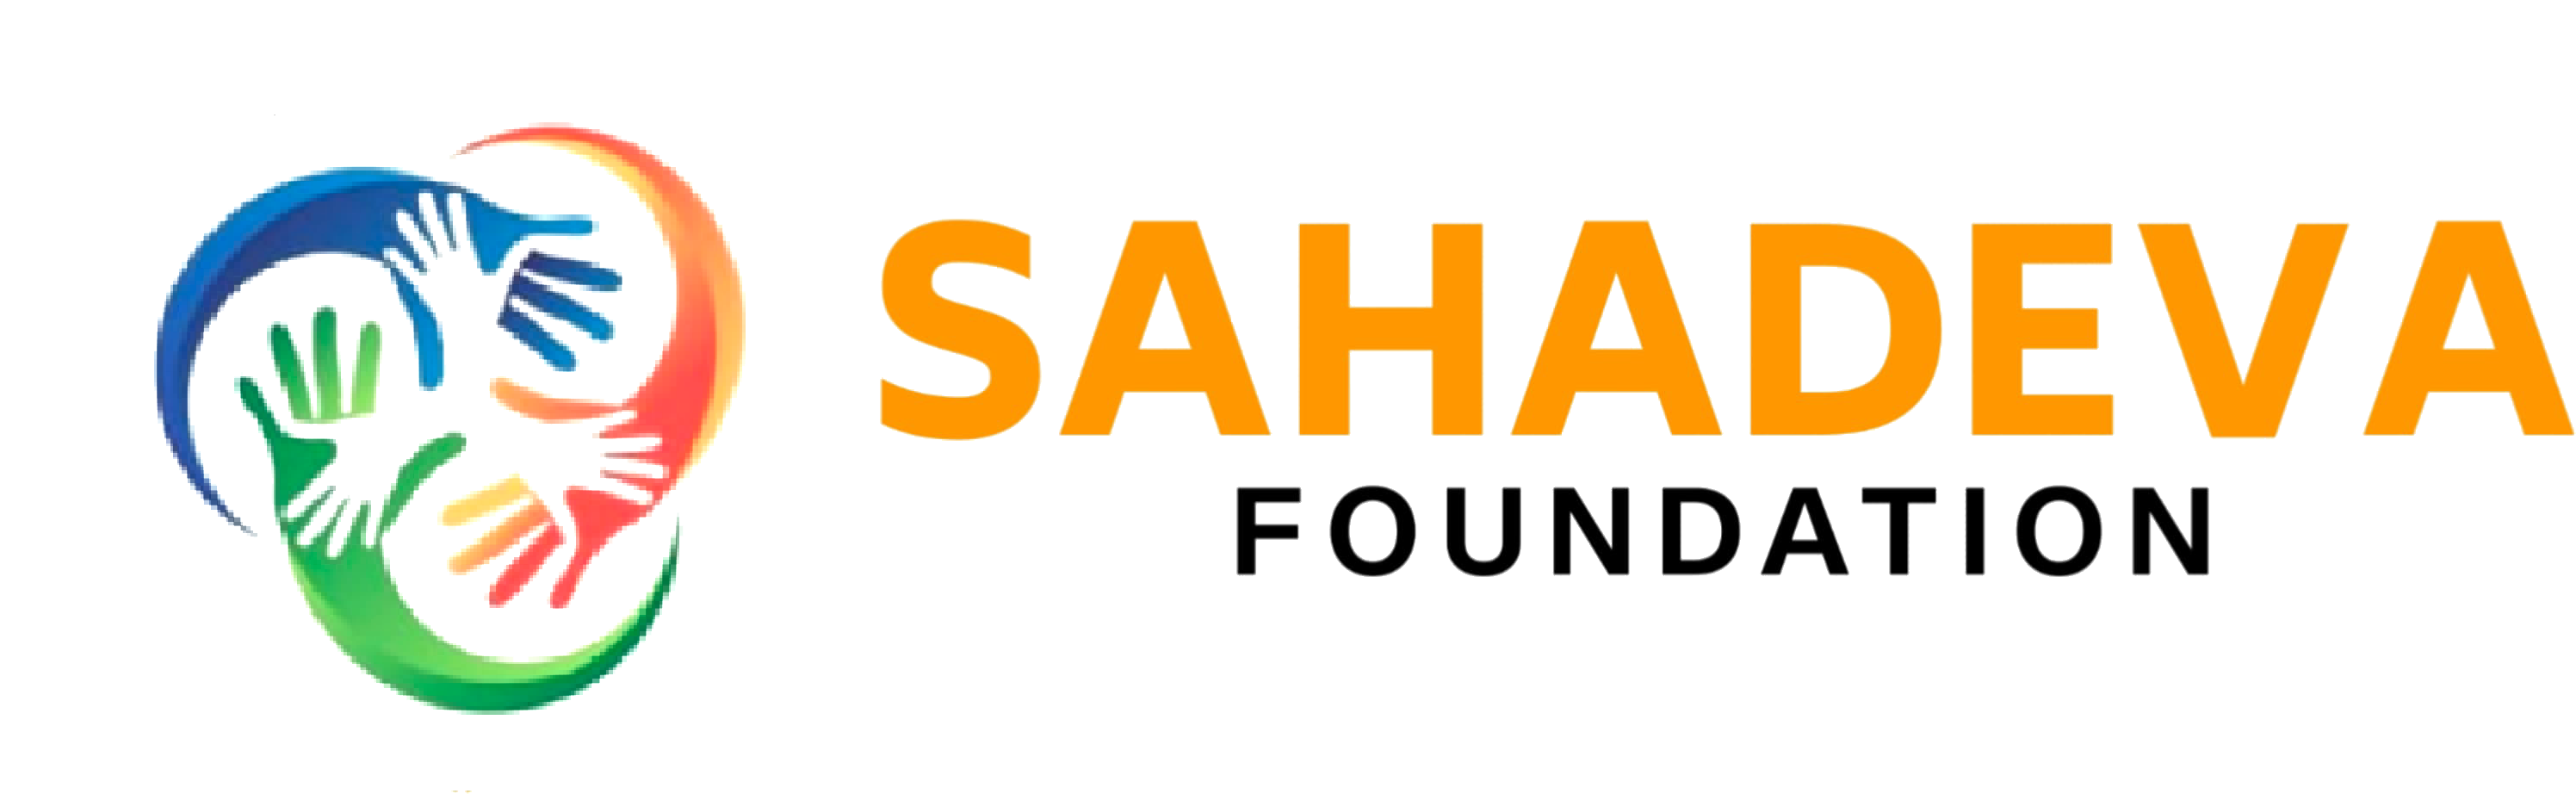 Sahadeva Foundation